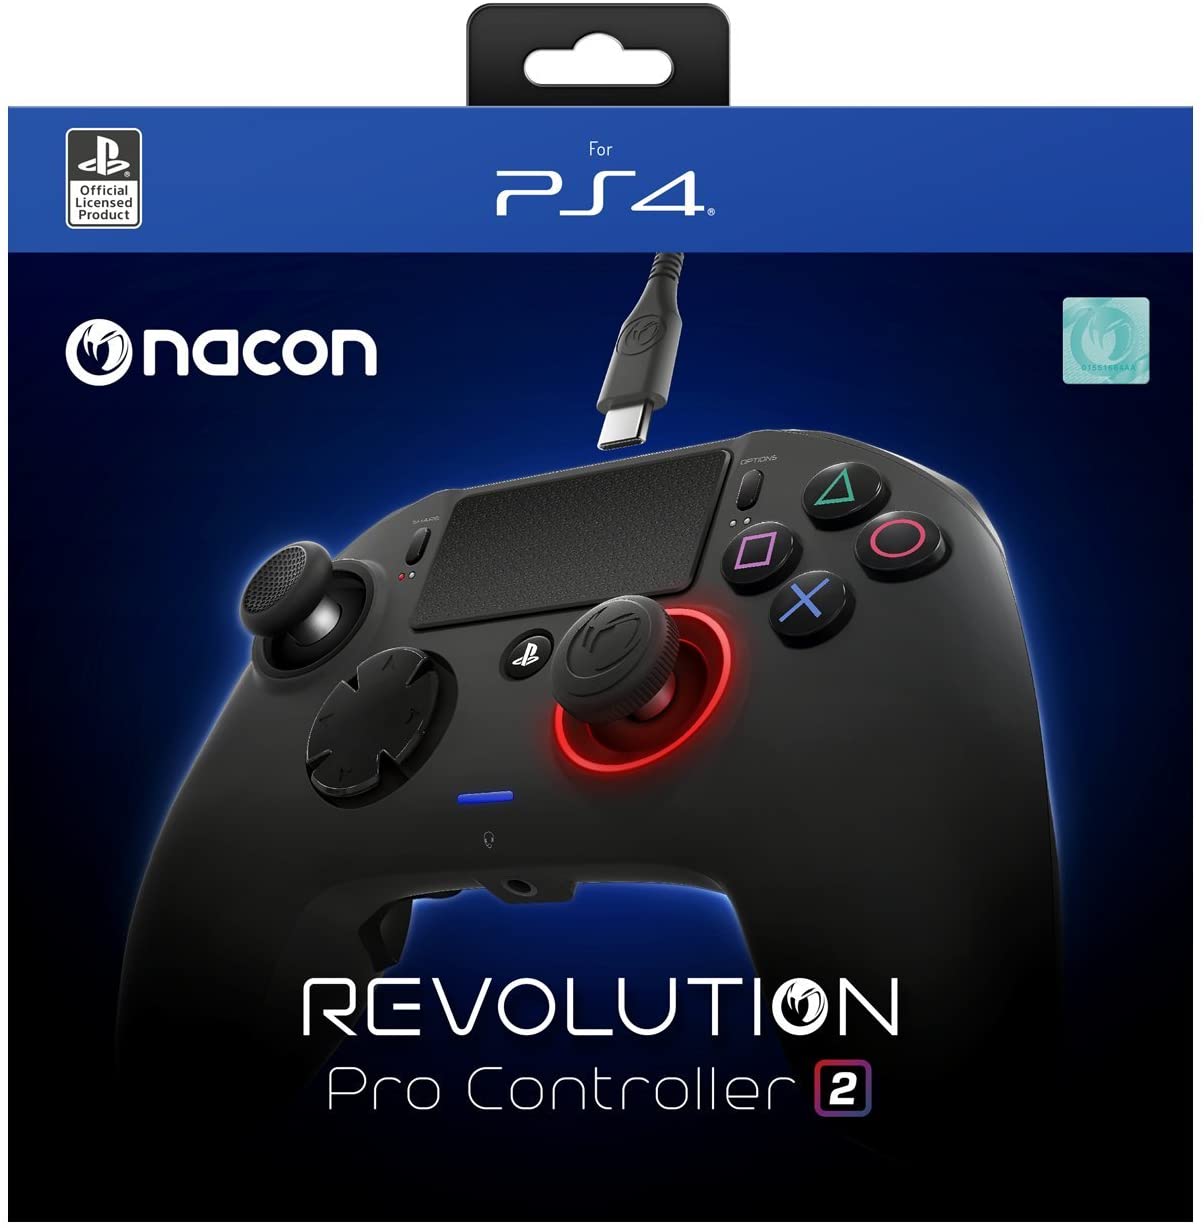 nacon revolution pro controller 3 price